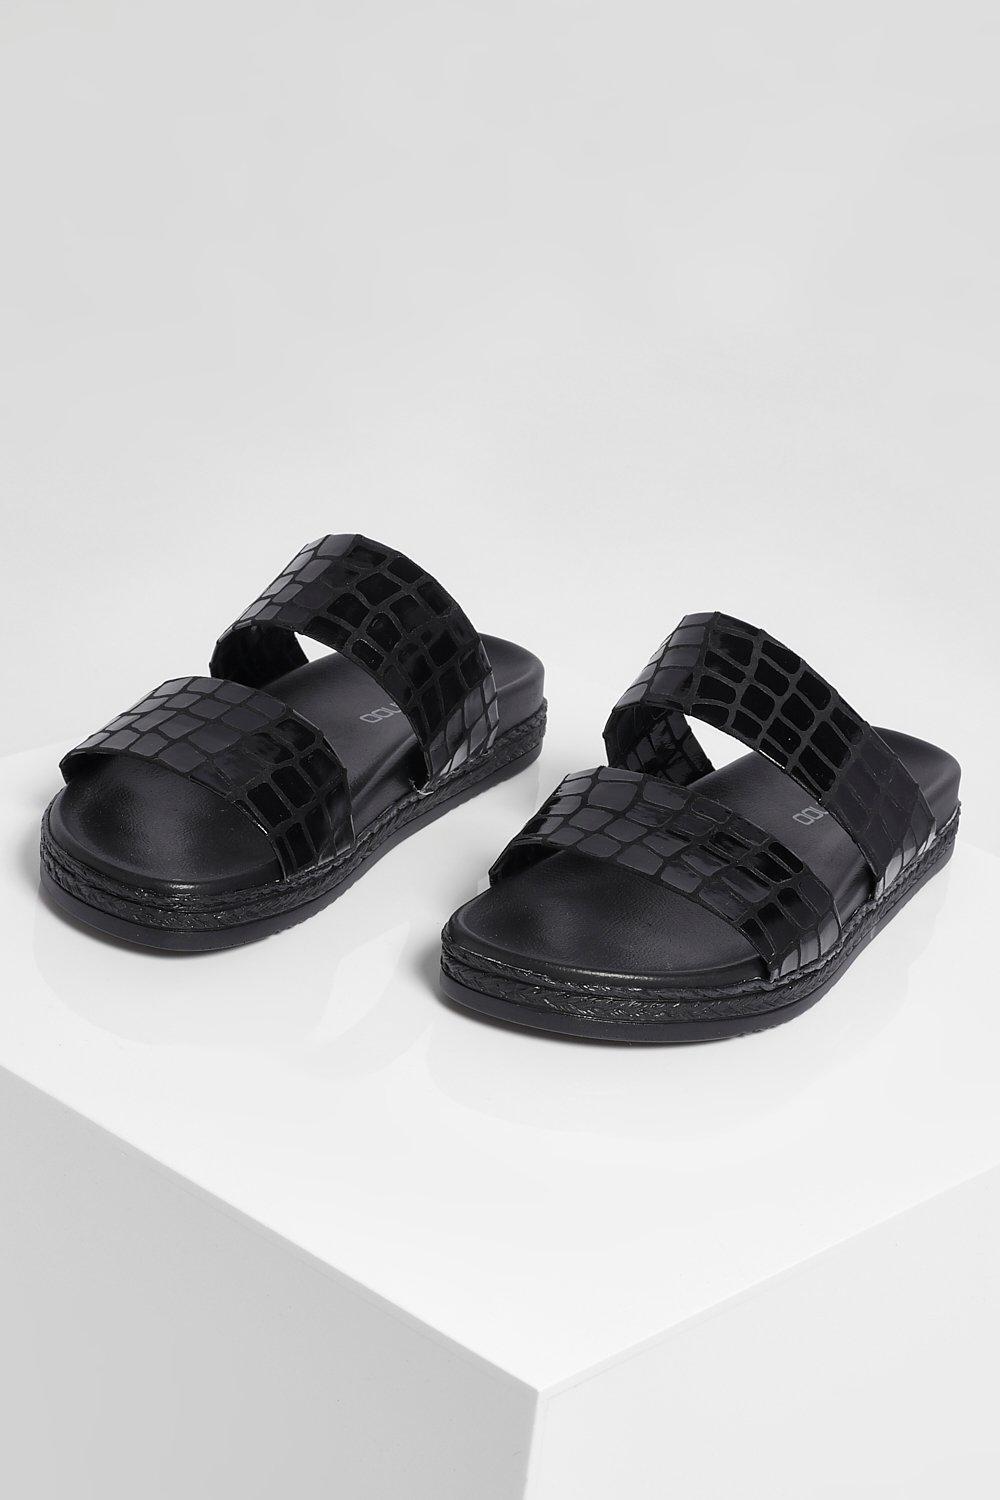 crocs two strap sandals